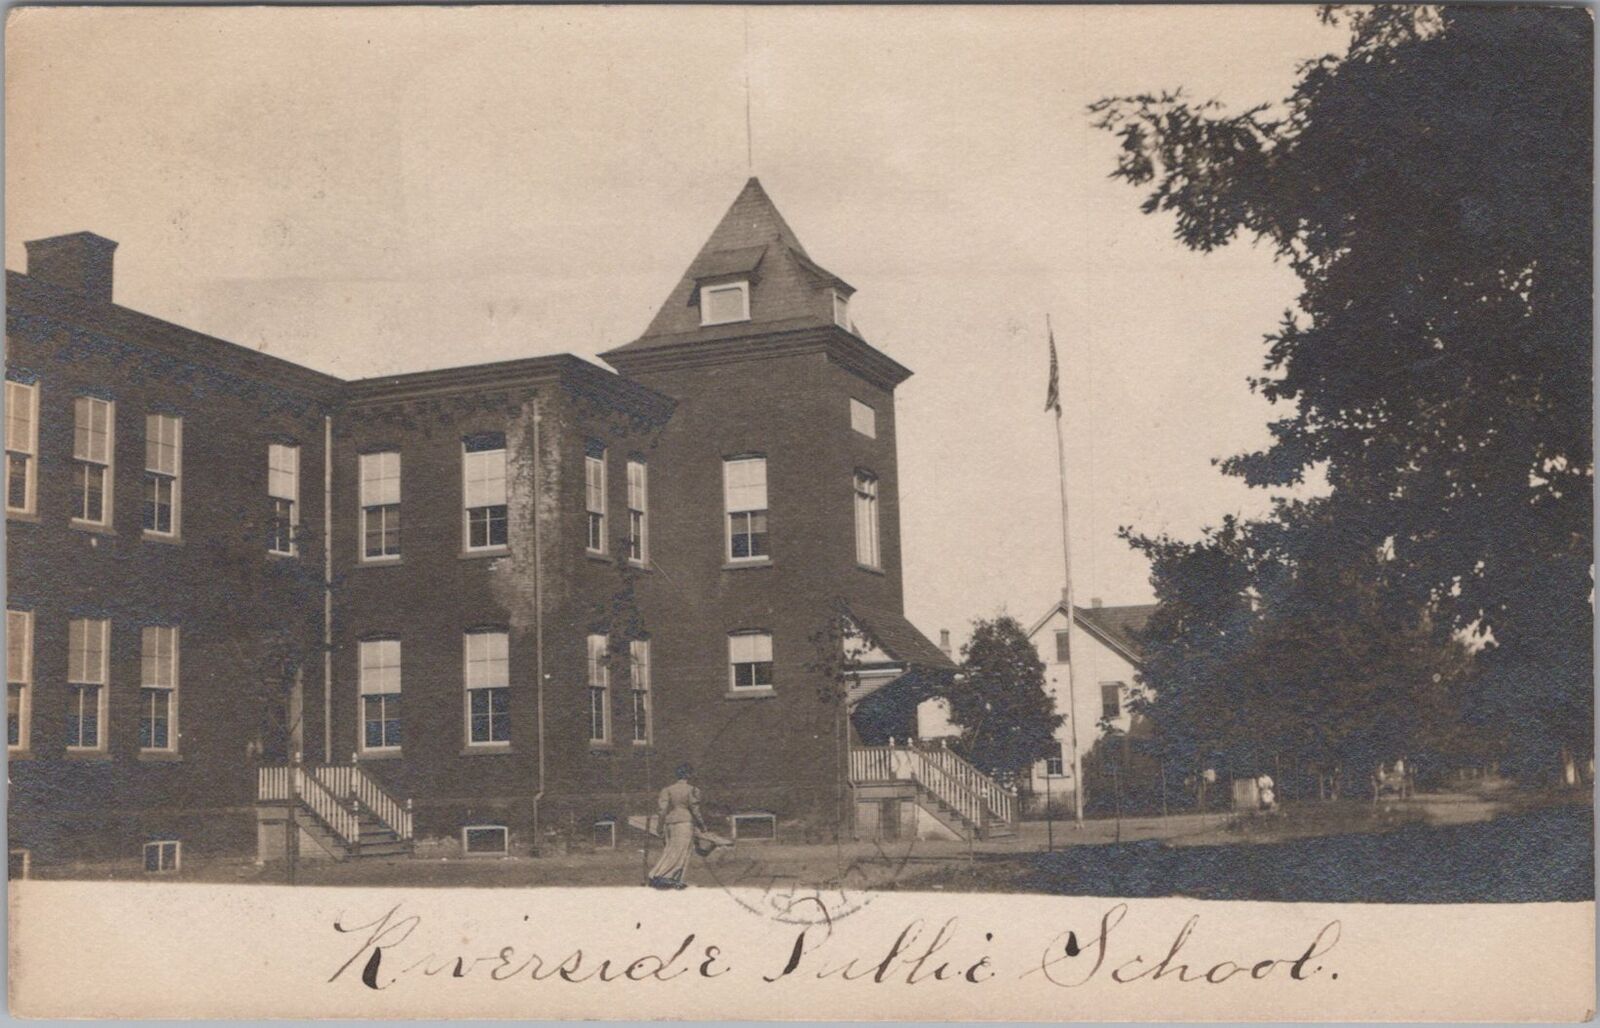 Riverside Public School New Jersey 1906 WM.H.Metzer RPPC Photo Postcard